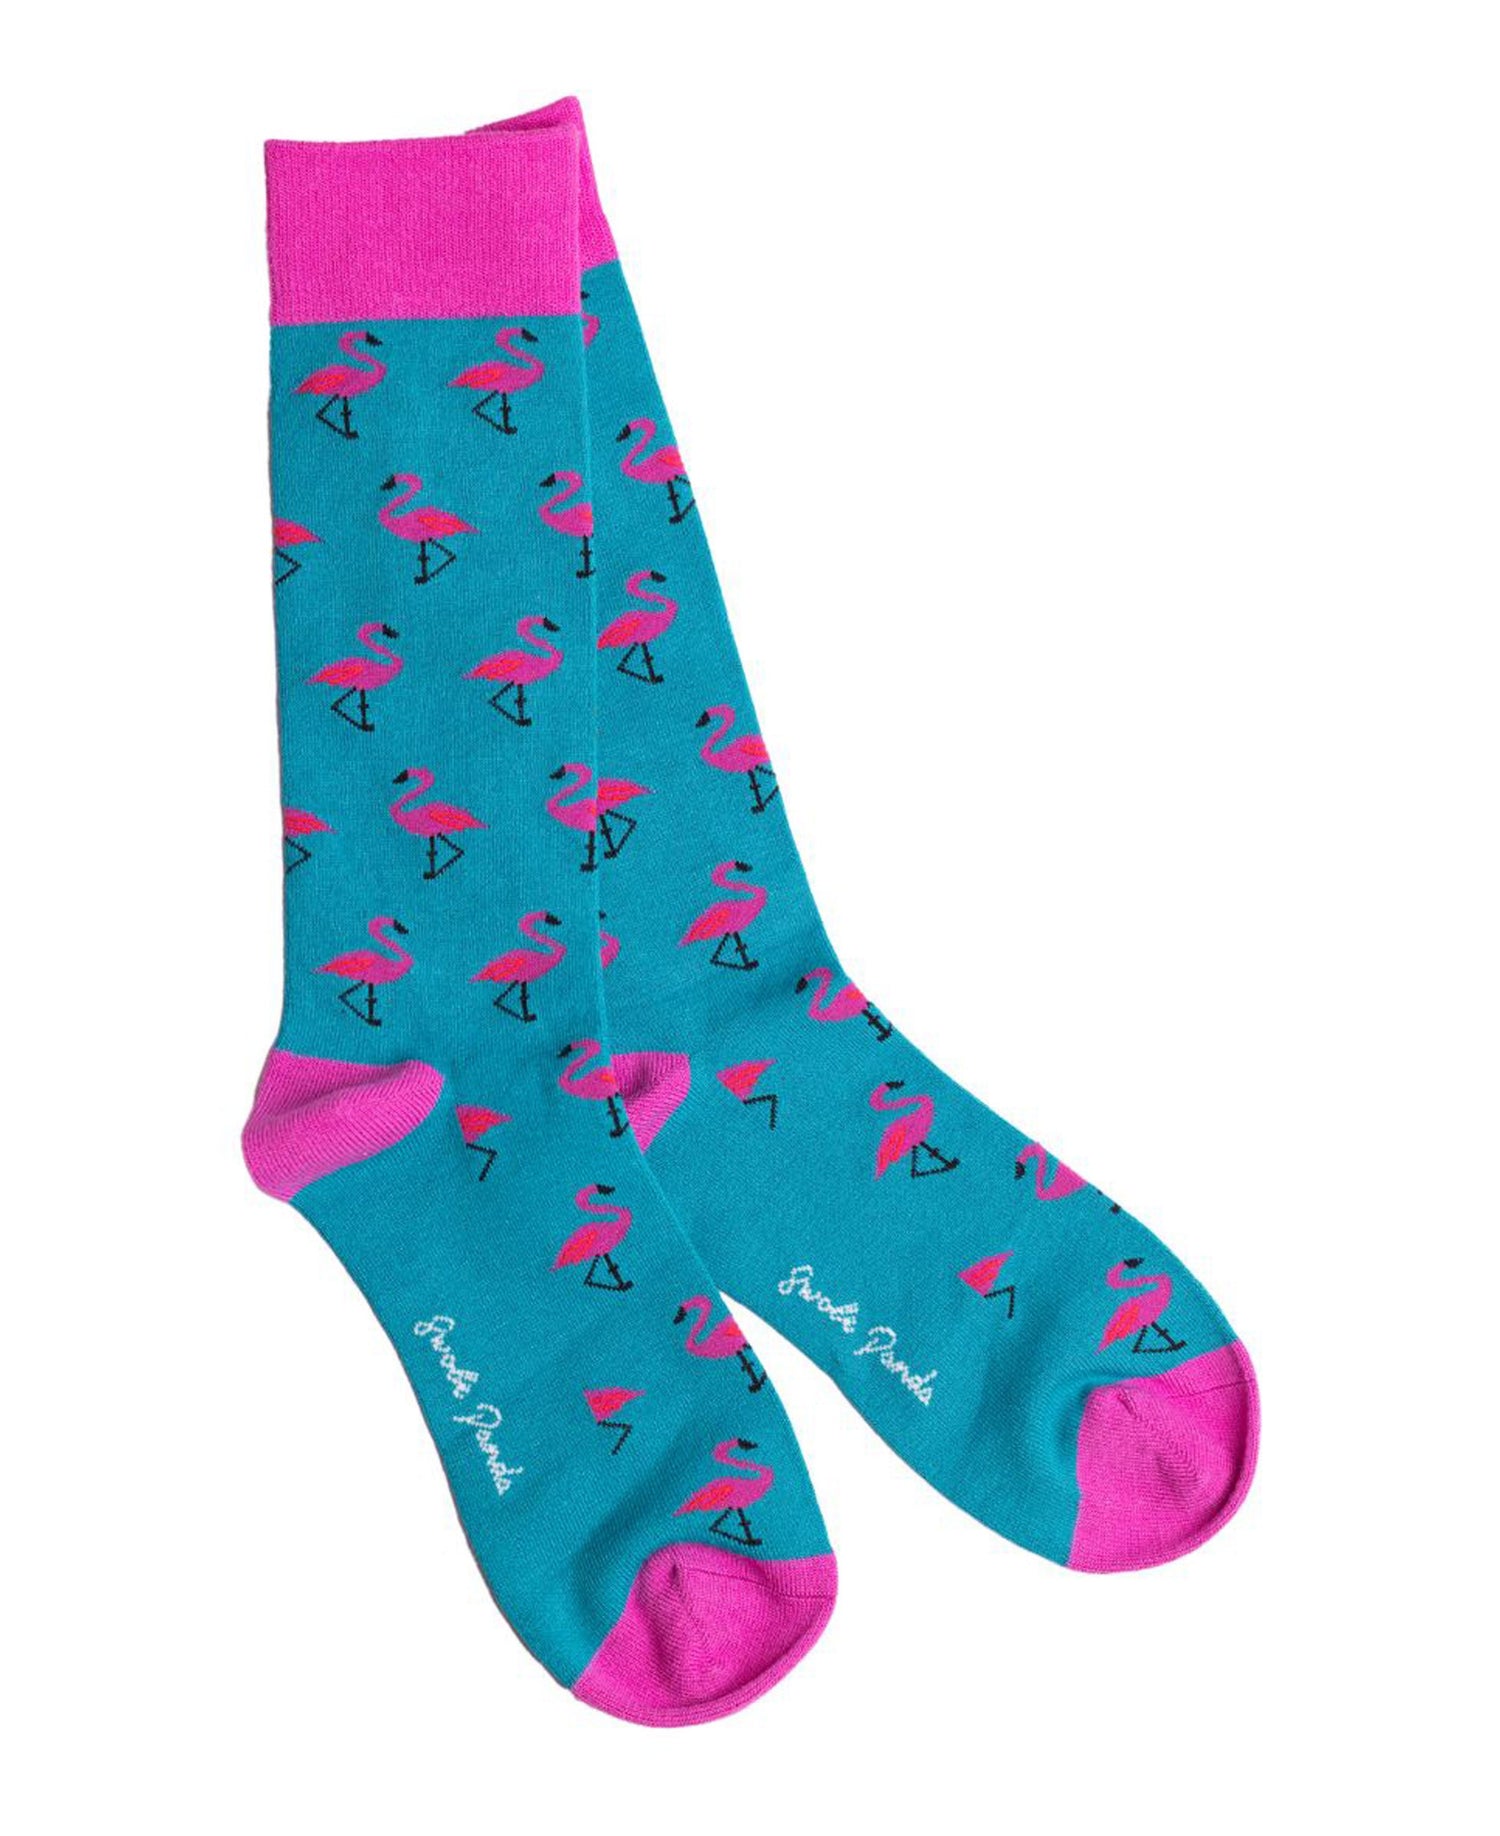 Patterned Socks - Flamingo